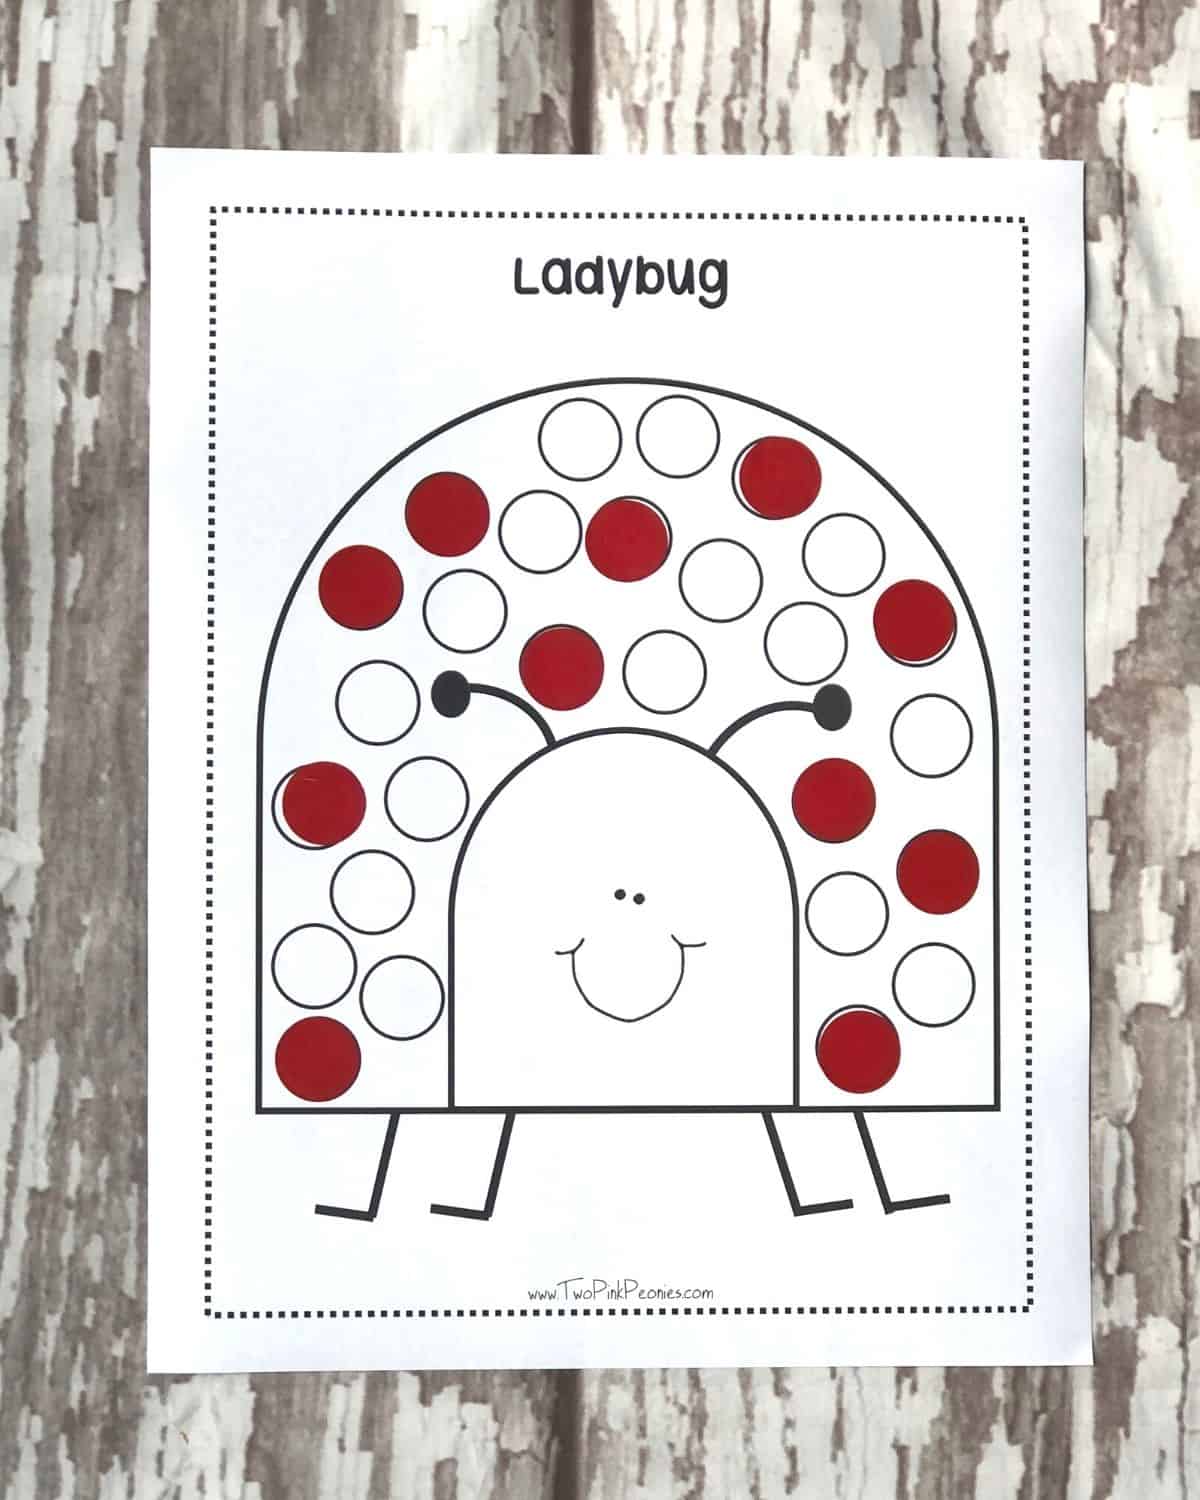 ladybug printable with dot stickers on it